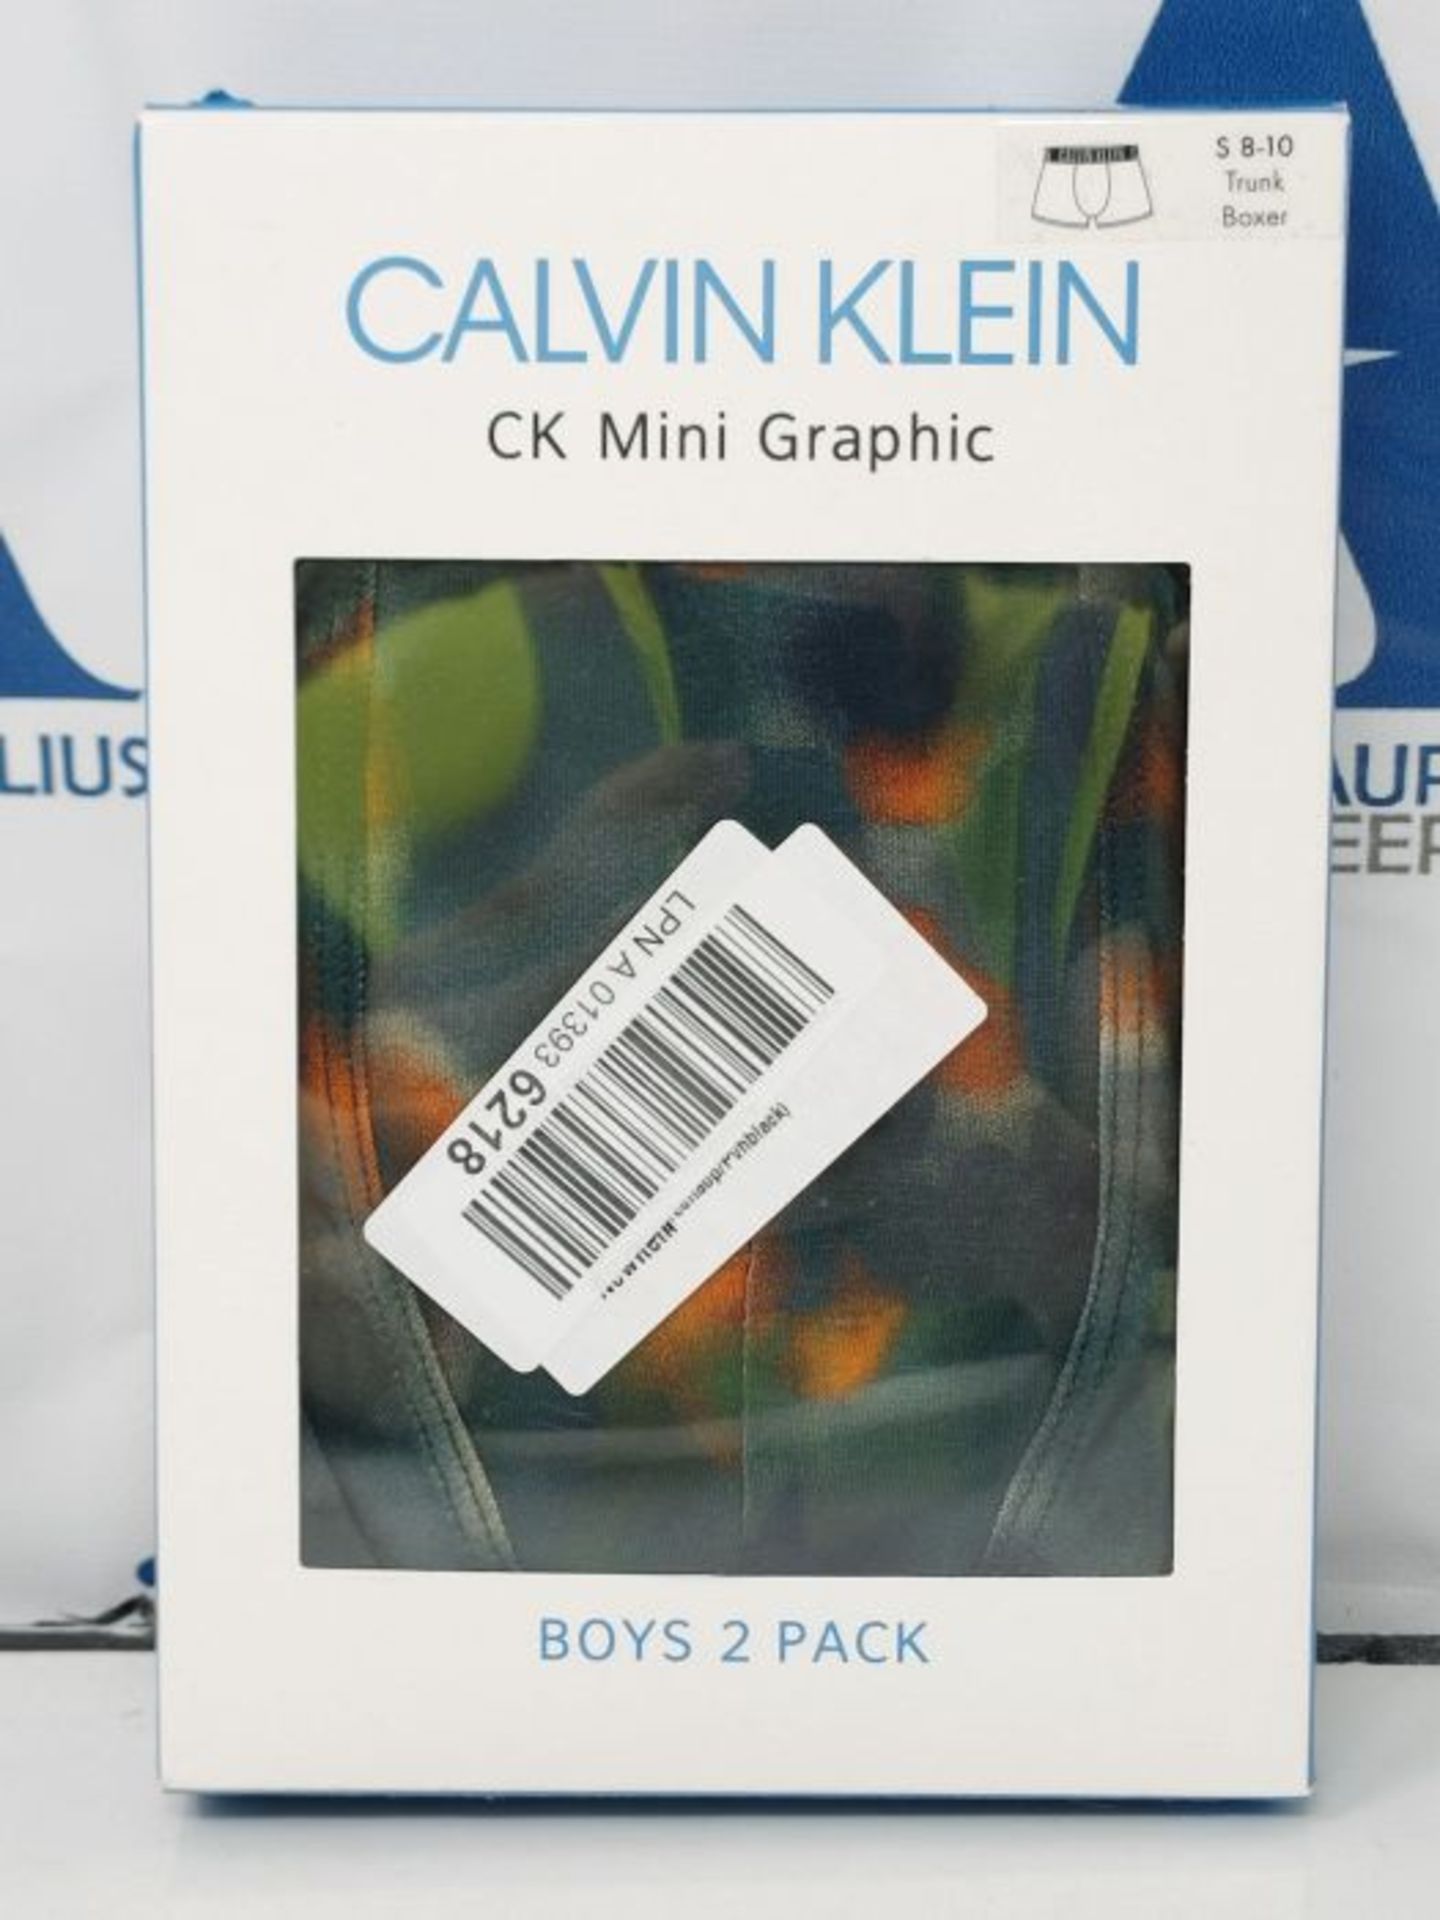 Calvin Klein Boy's 2PK Trunks, Patchblurgreenaop/Pvhblack, 8-10 Years - Image 2 of 3